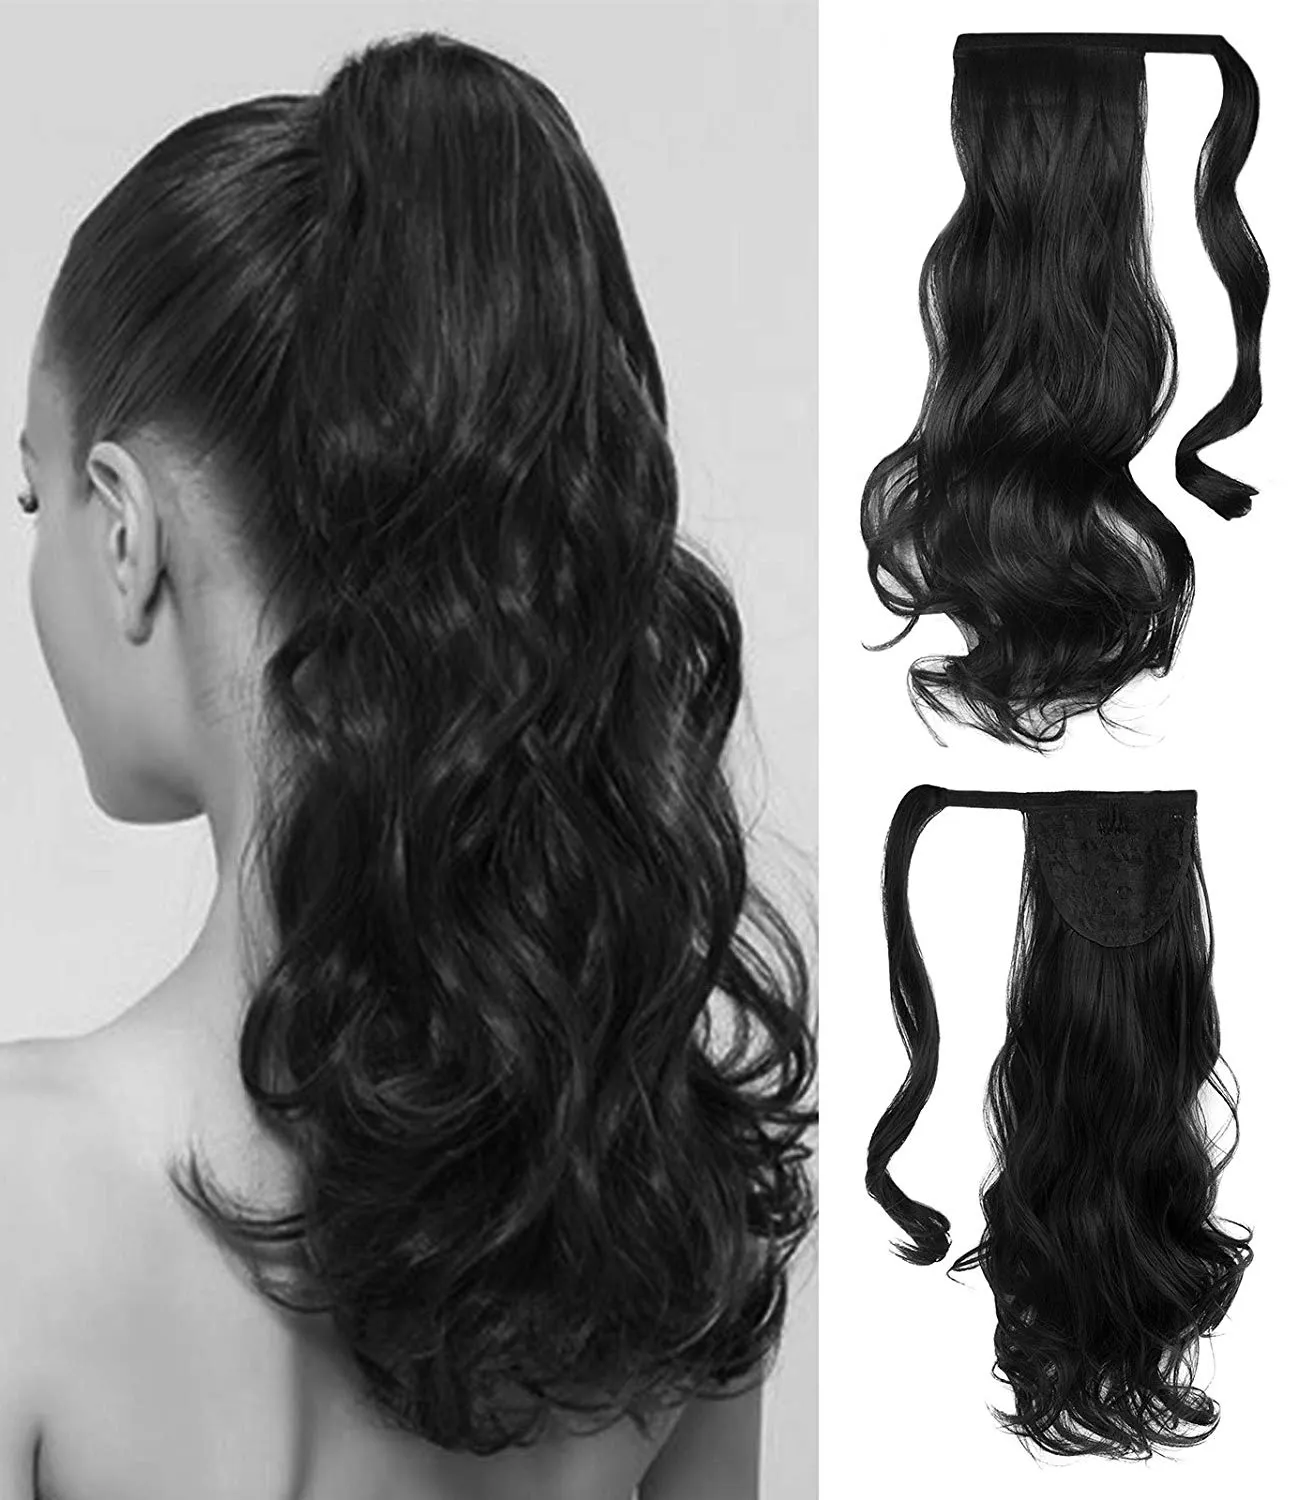 9A Ponytail Wrap Clip Hair Extensions 100% Virgin Brazilian Peruvian Malaysian Indian Remy Human Wavy Hair Horsetail Color 1B